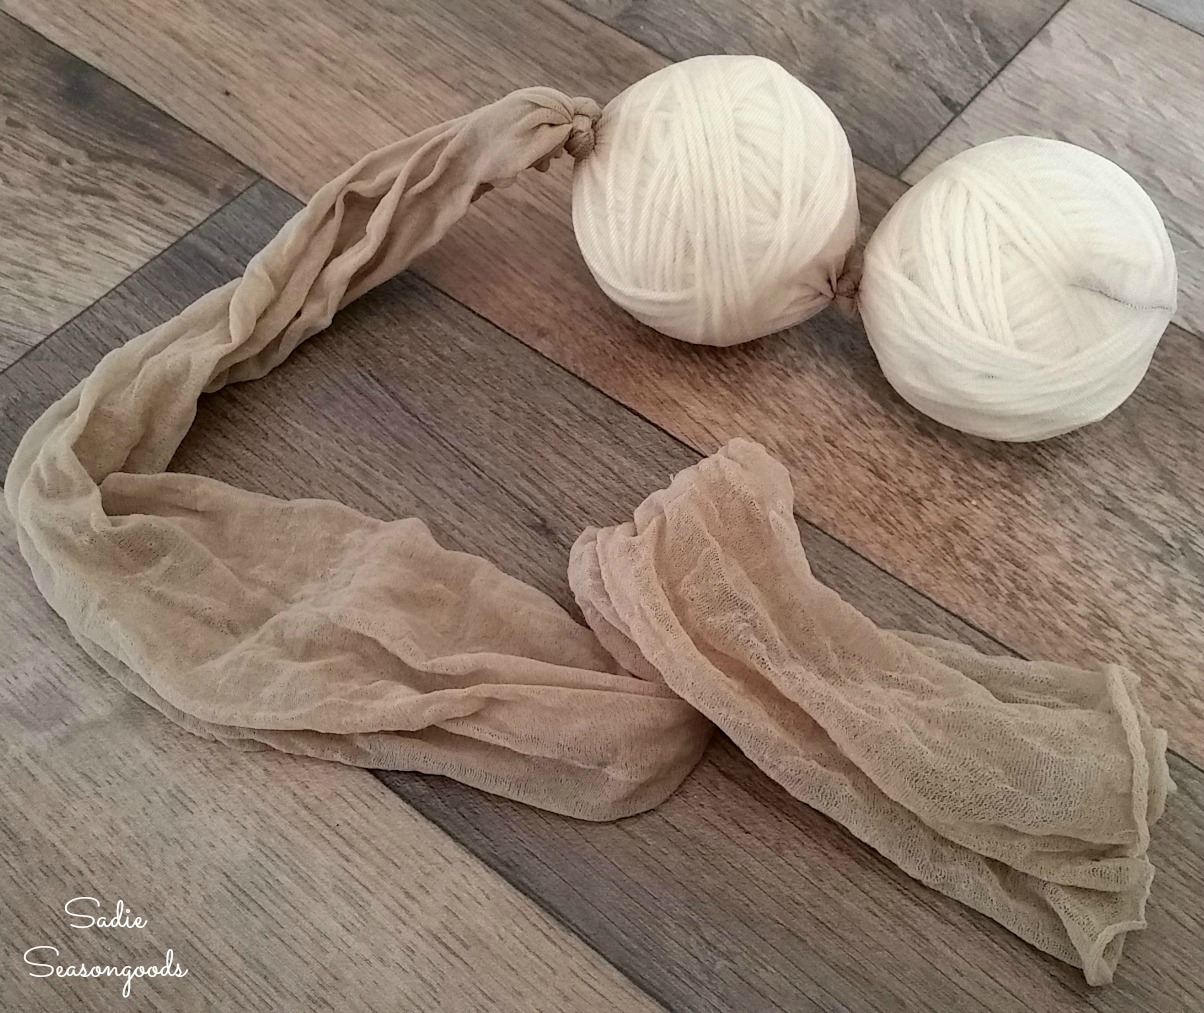 Felting wool dryer balls inside pantyhose or nylons as a fabric softener alternative by Sadie Seasongoods